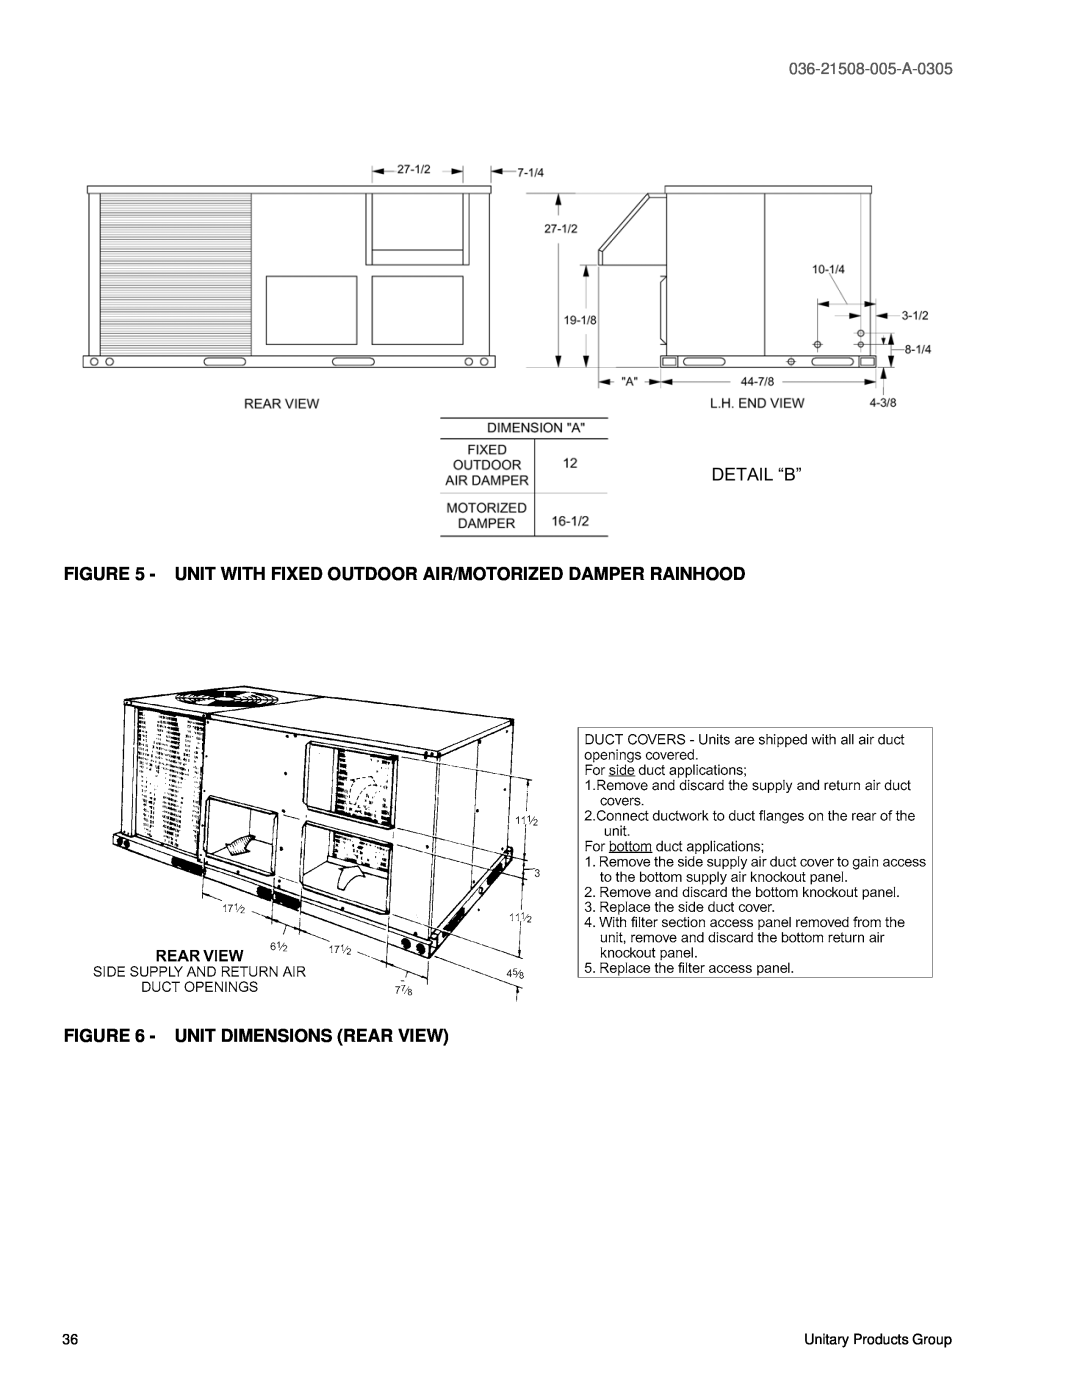 York BQ 060, BQ 036, BQ 048 warranty Unit Dimensions Rear View, Detail “B”, 036-21508-005-A-0305 